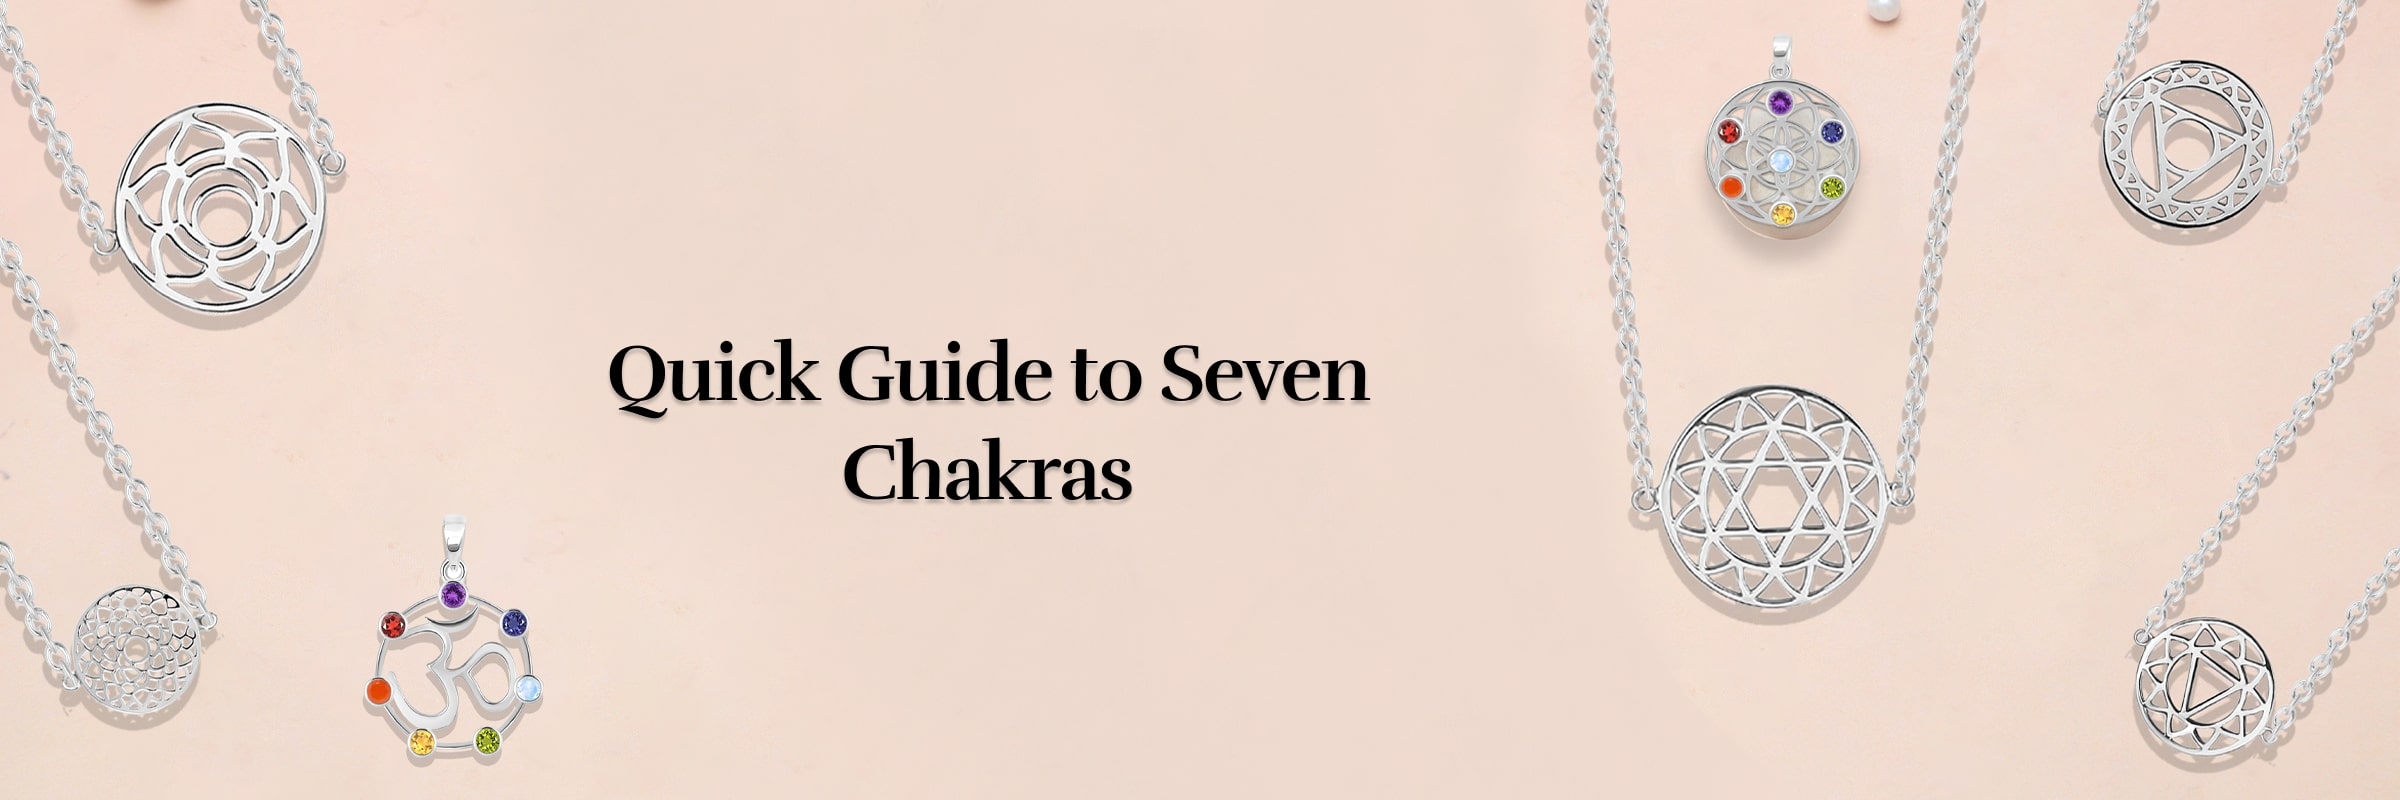 A Brief Summary of the Seven Chakras